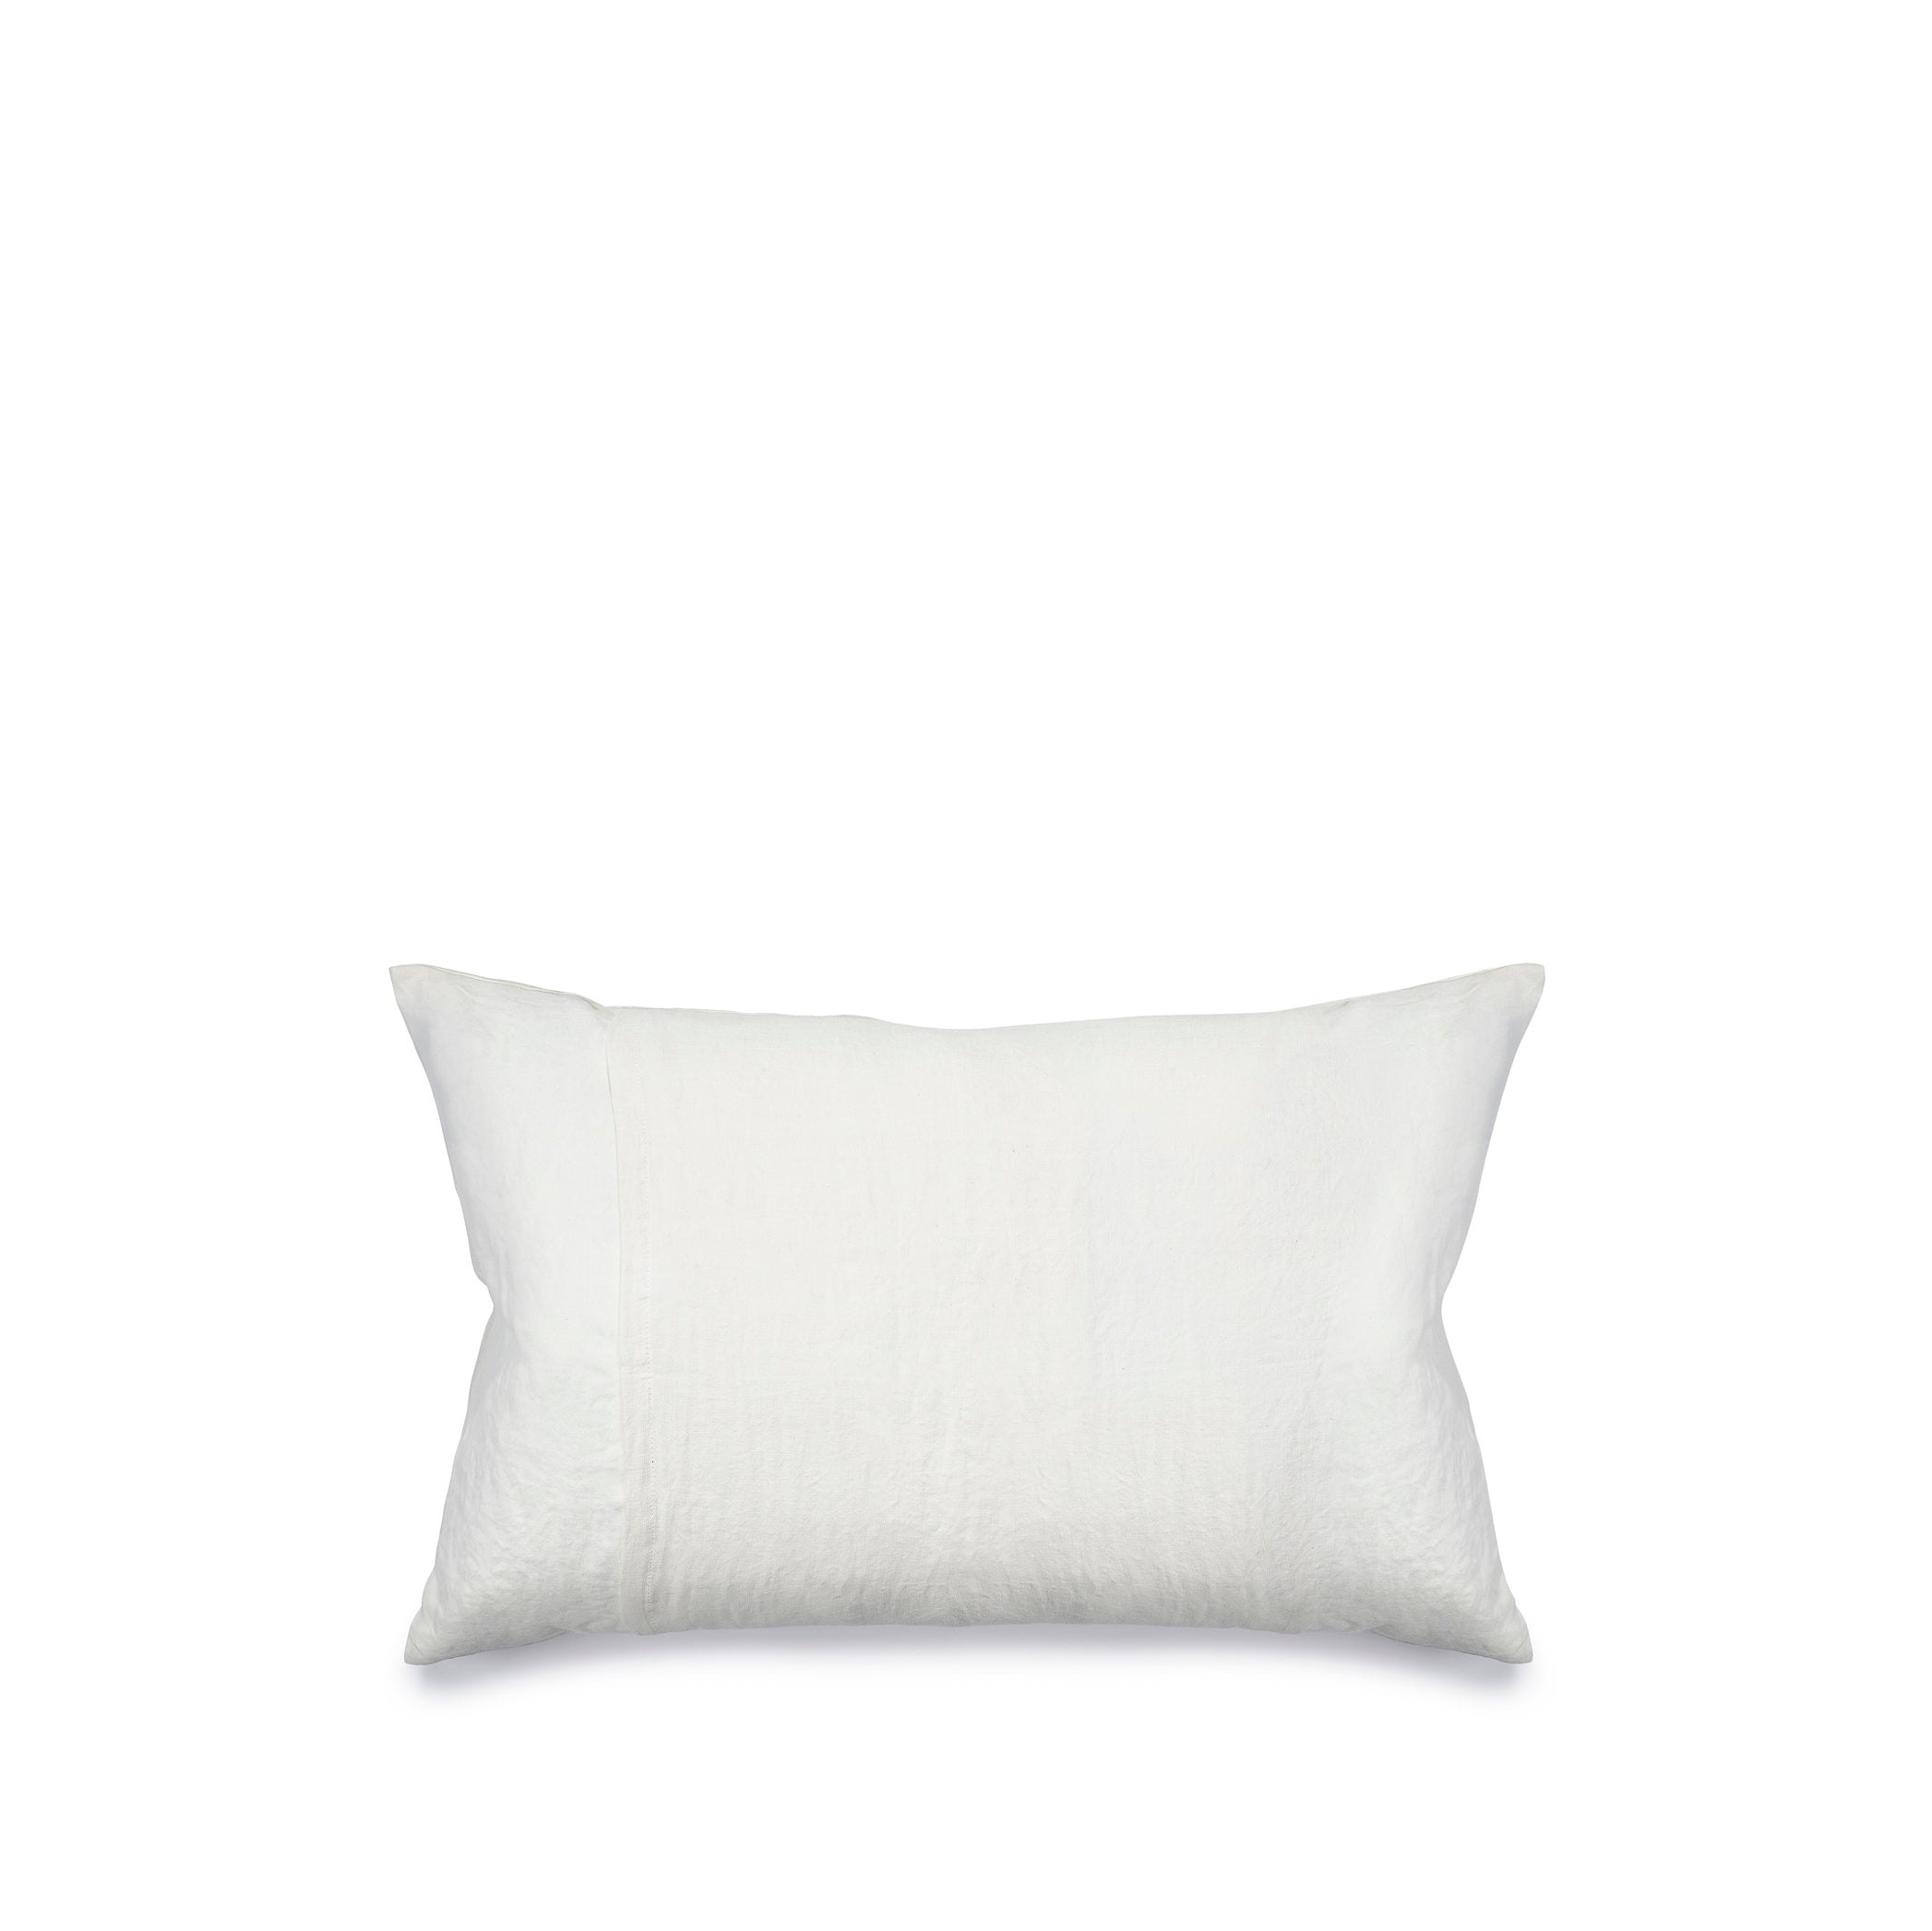 Hand Painted Linen Cushion in Pale Blue, 60cm x 40cm